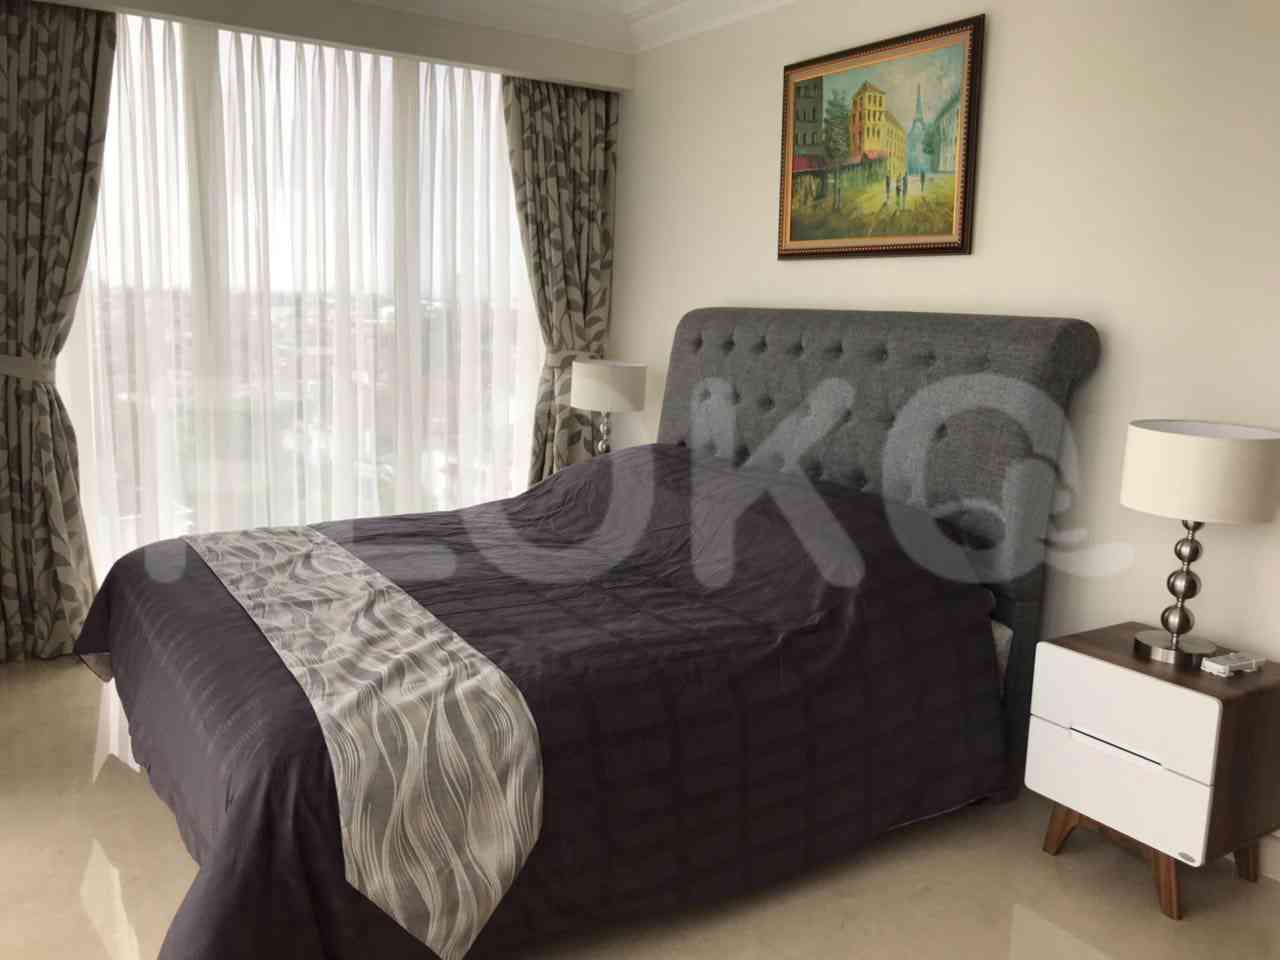 3 Bedroom on 8th Floor for Rent in Pondok Indah Residence - fpo404 3